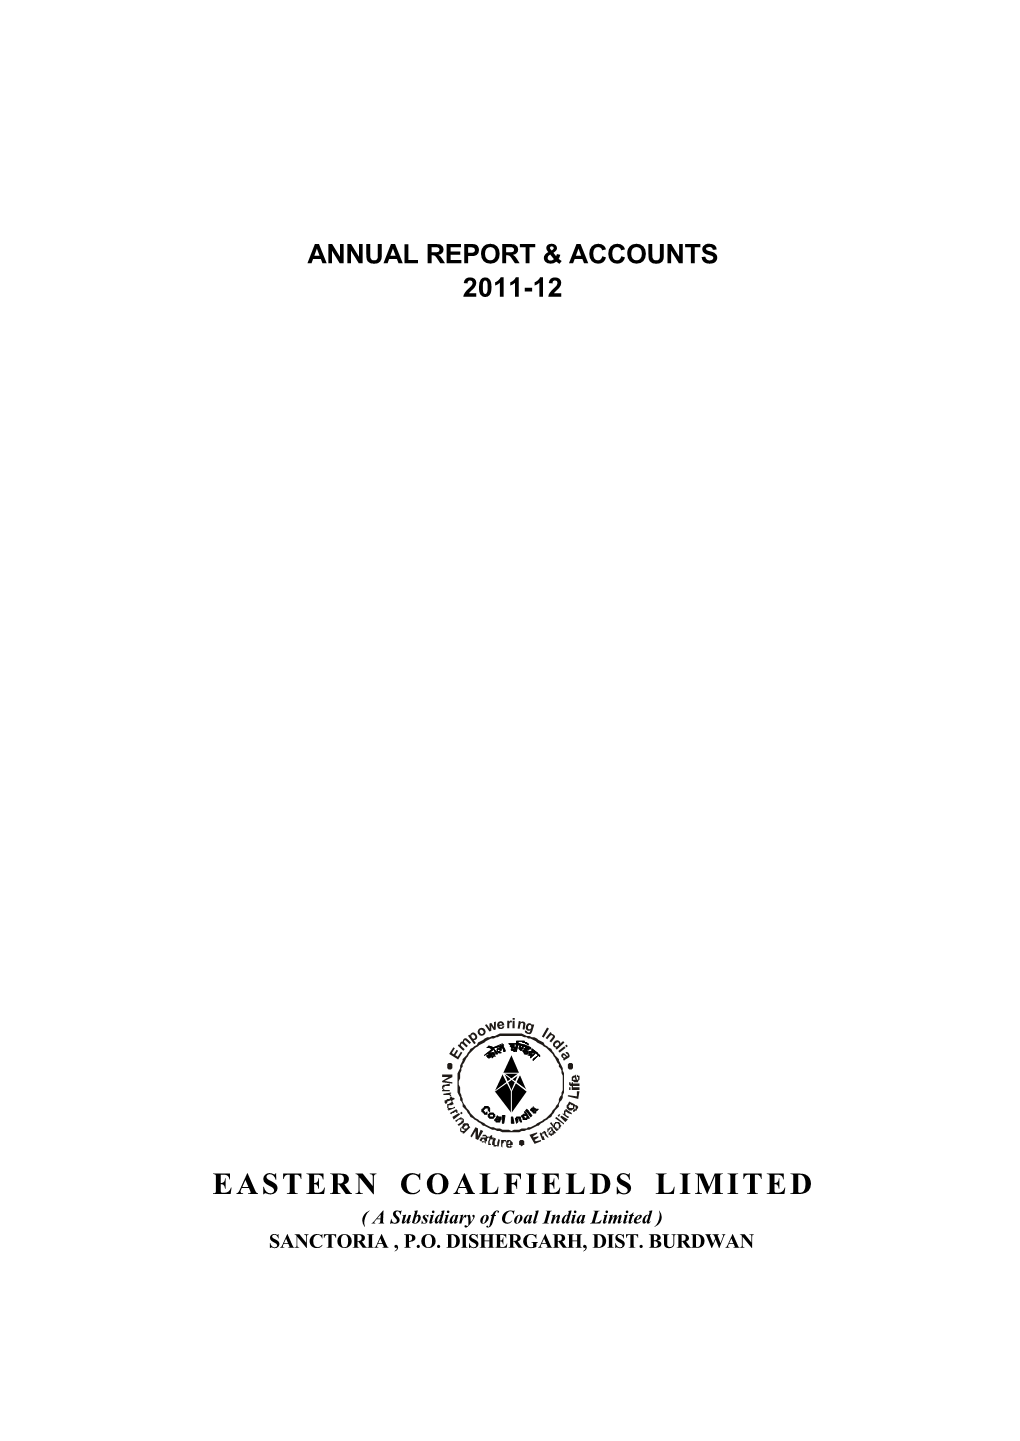 Annual Report & Accounts 2011-12